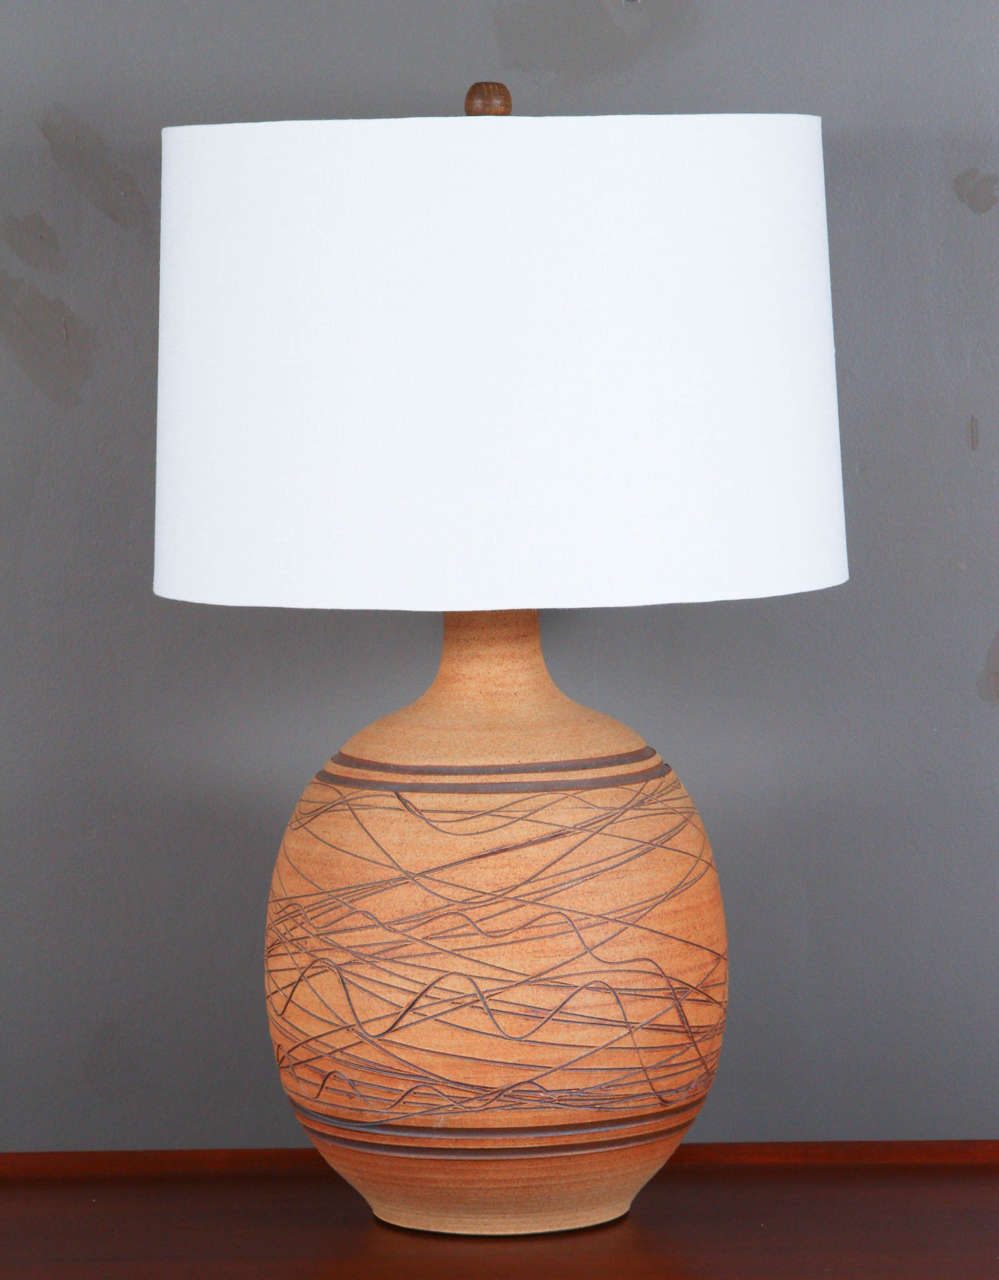 Incised bisque ceramic lamp by design duo Wishon-Harrell.